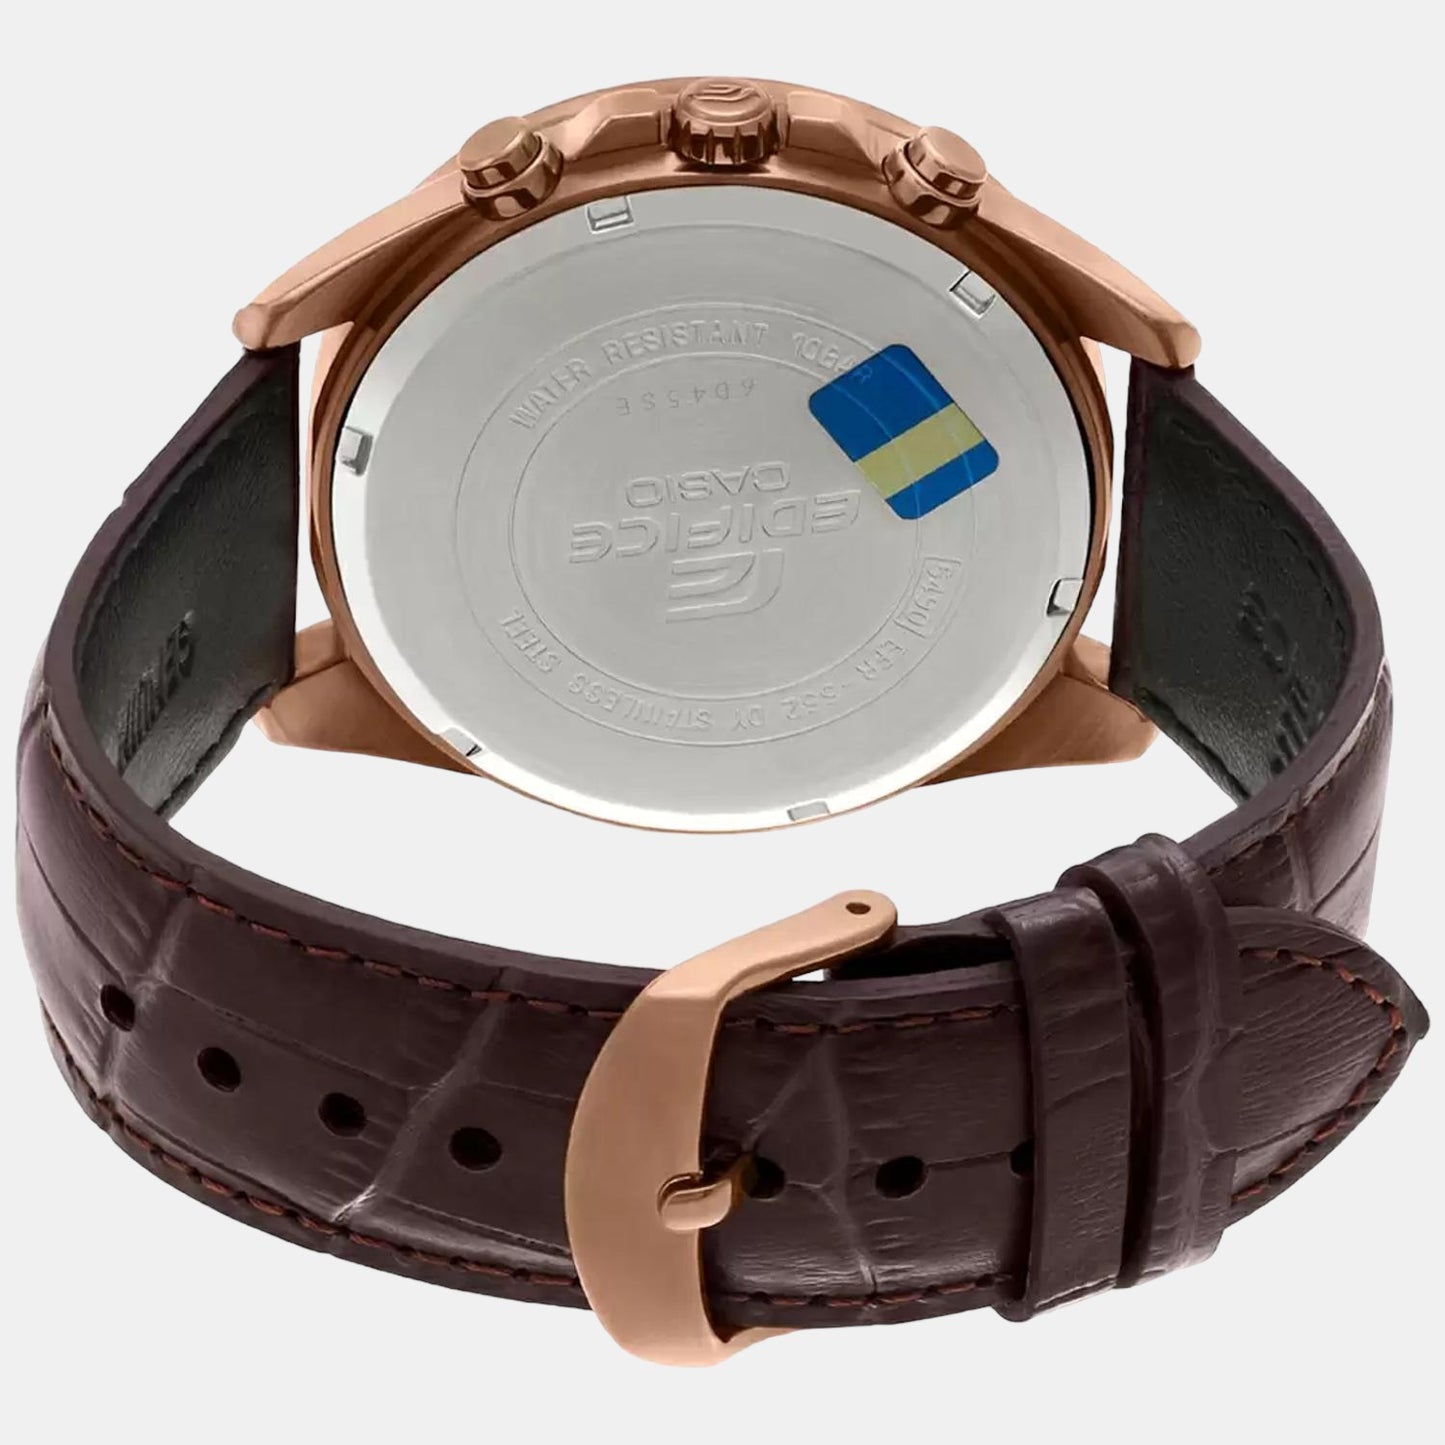 Edifice Men's Chronograph Leather Watch EX358 - EFR-552GL-2AVUDF